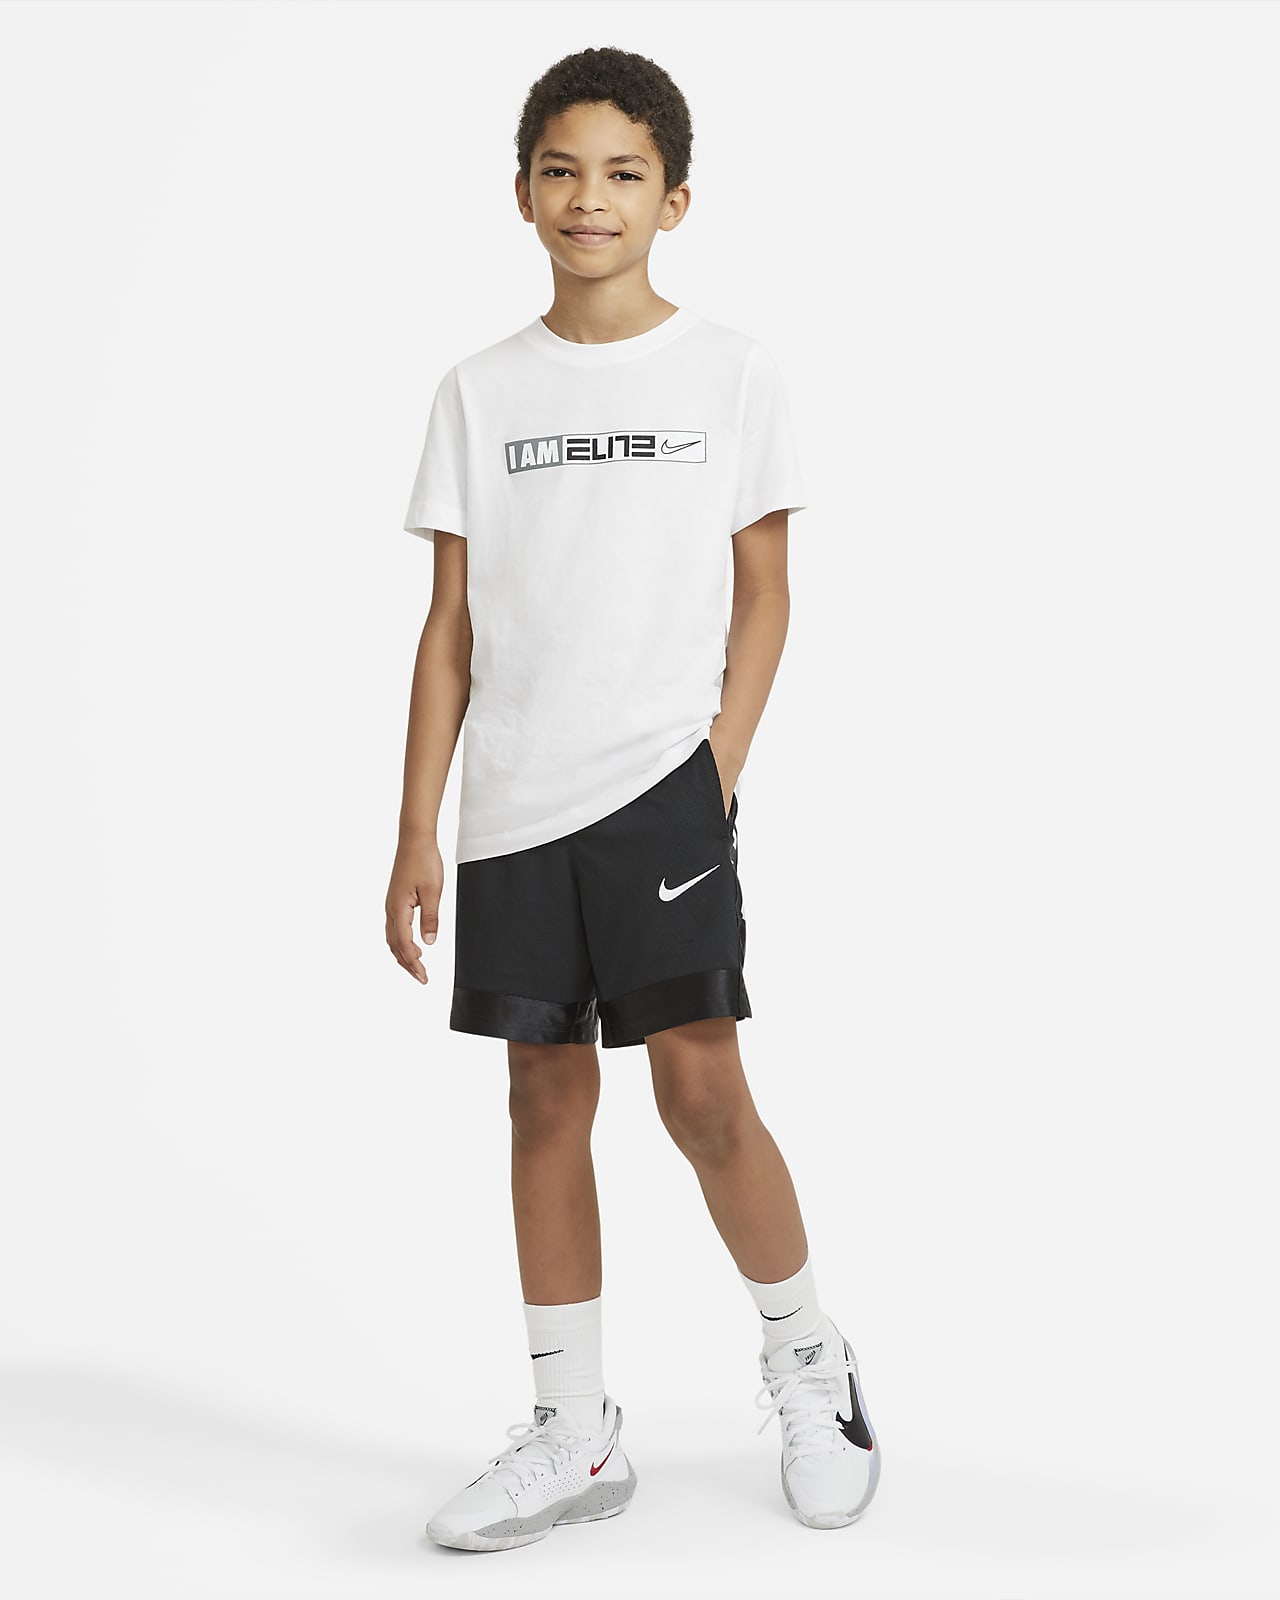 Nike Dri-Fit Elite Basketball Shorts - Boys' L Black/White